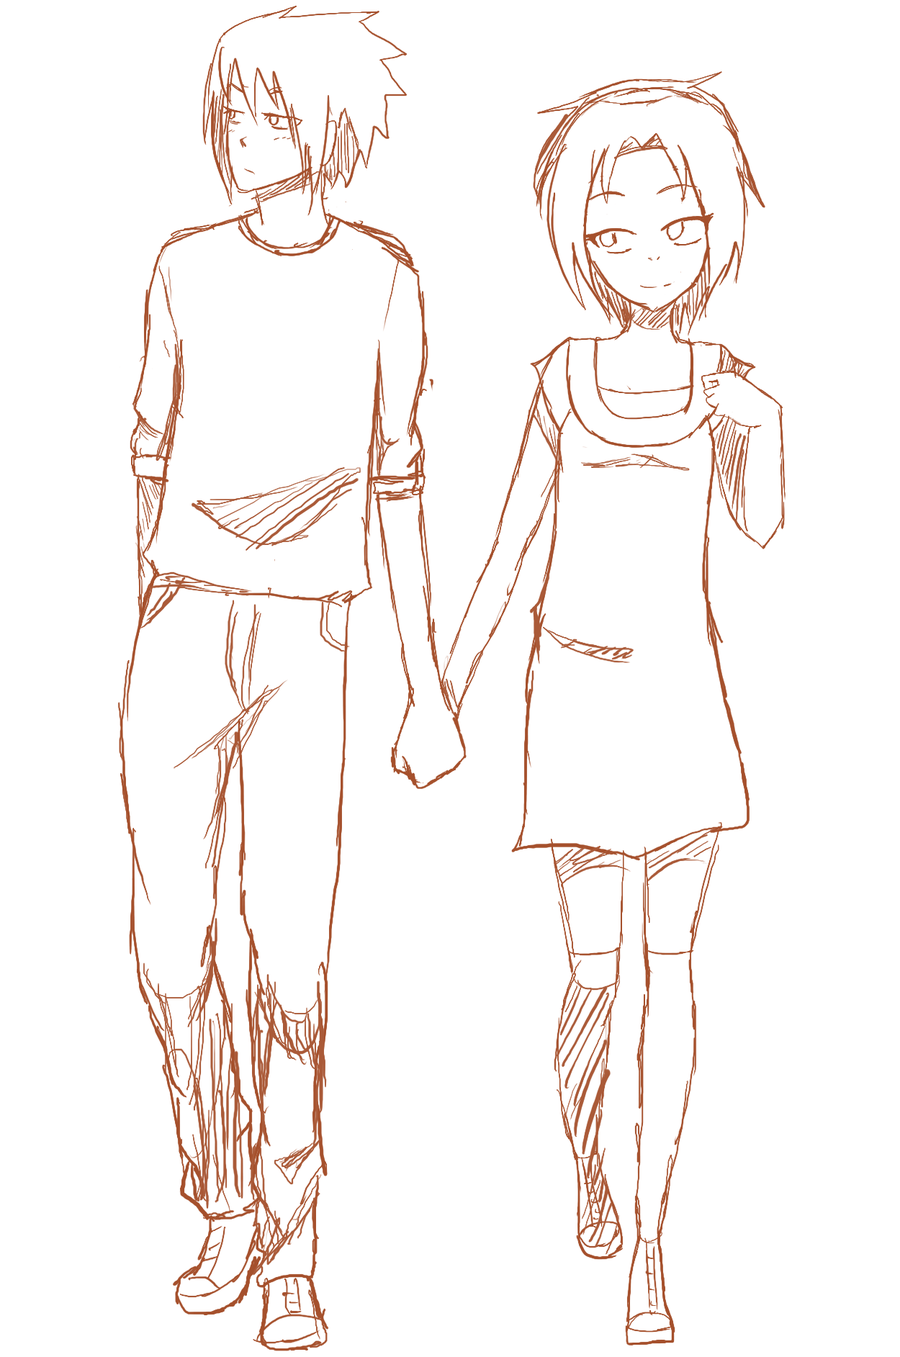 Another Cute Anime Couple 😊😊 : r/AnimeSketch